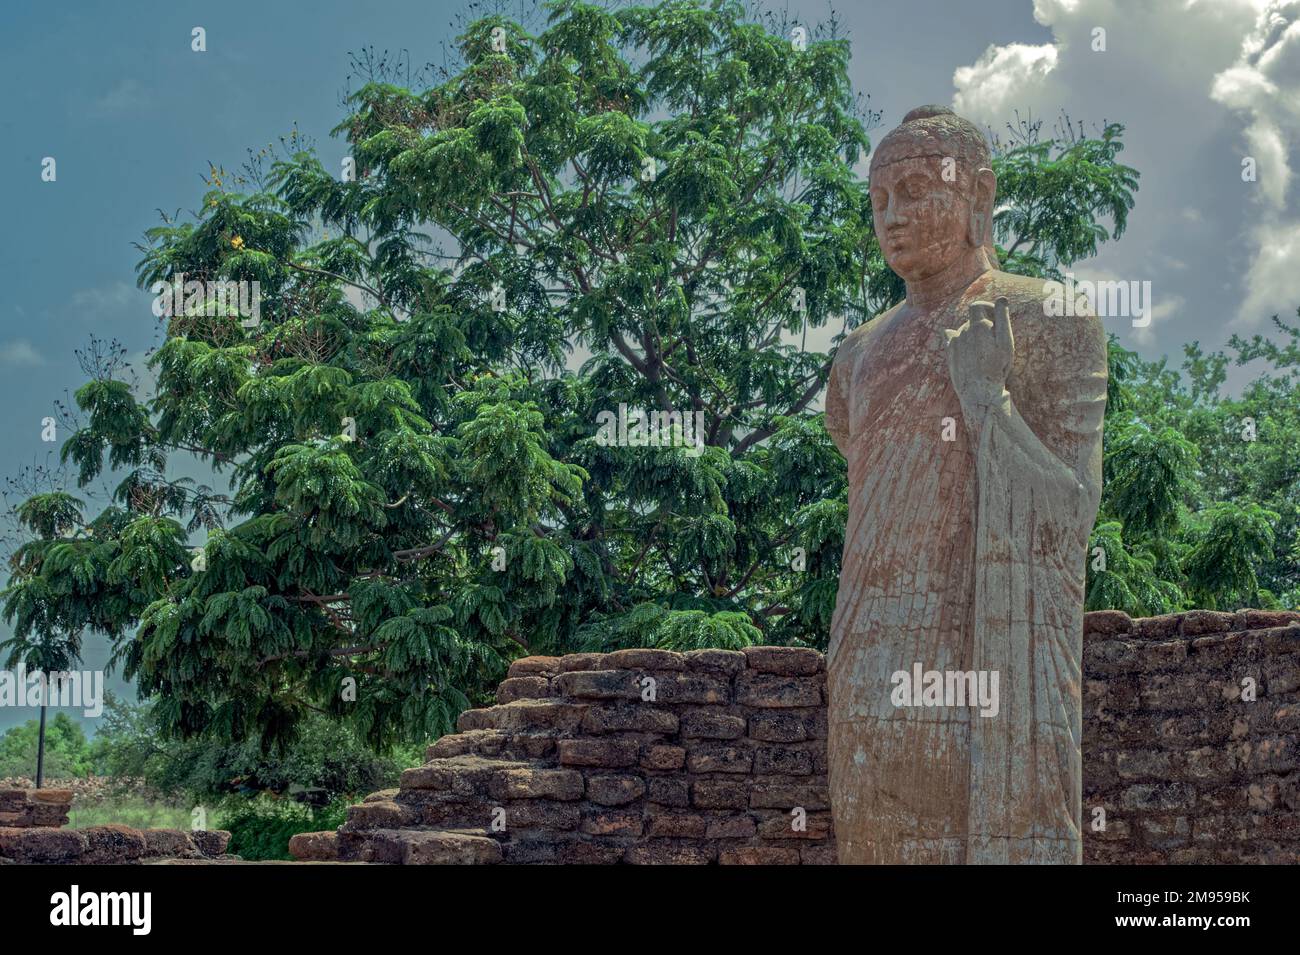 08 23 2015 statua del Buddha 3rd ° secolo d.C. Rovine di Nagarjunakonda, Nagarjuna Sagar Andhra Pradesh, India, Asia, indiano, asiatico Foto Stock